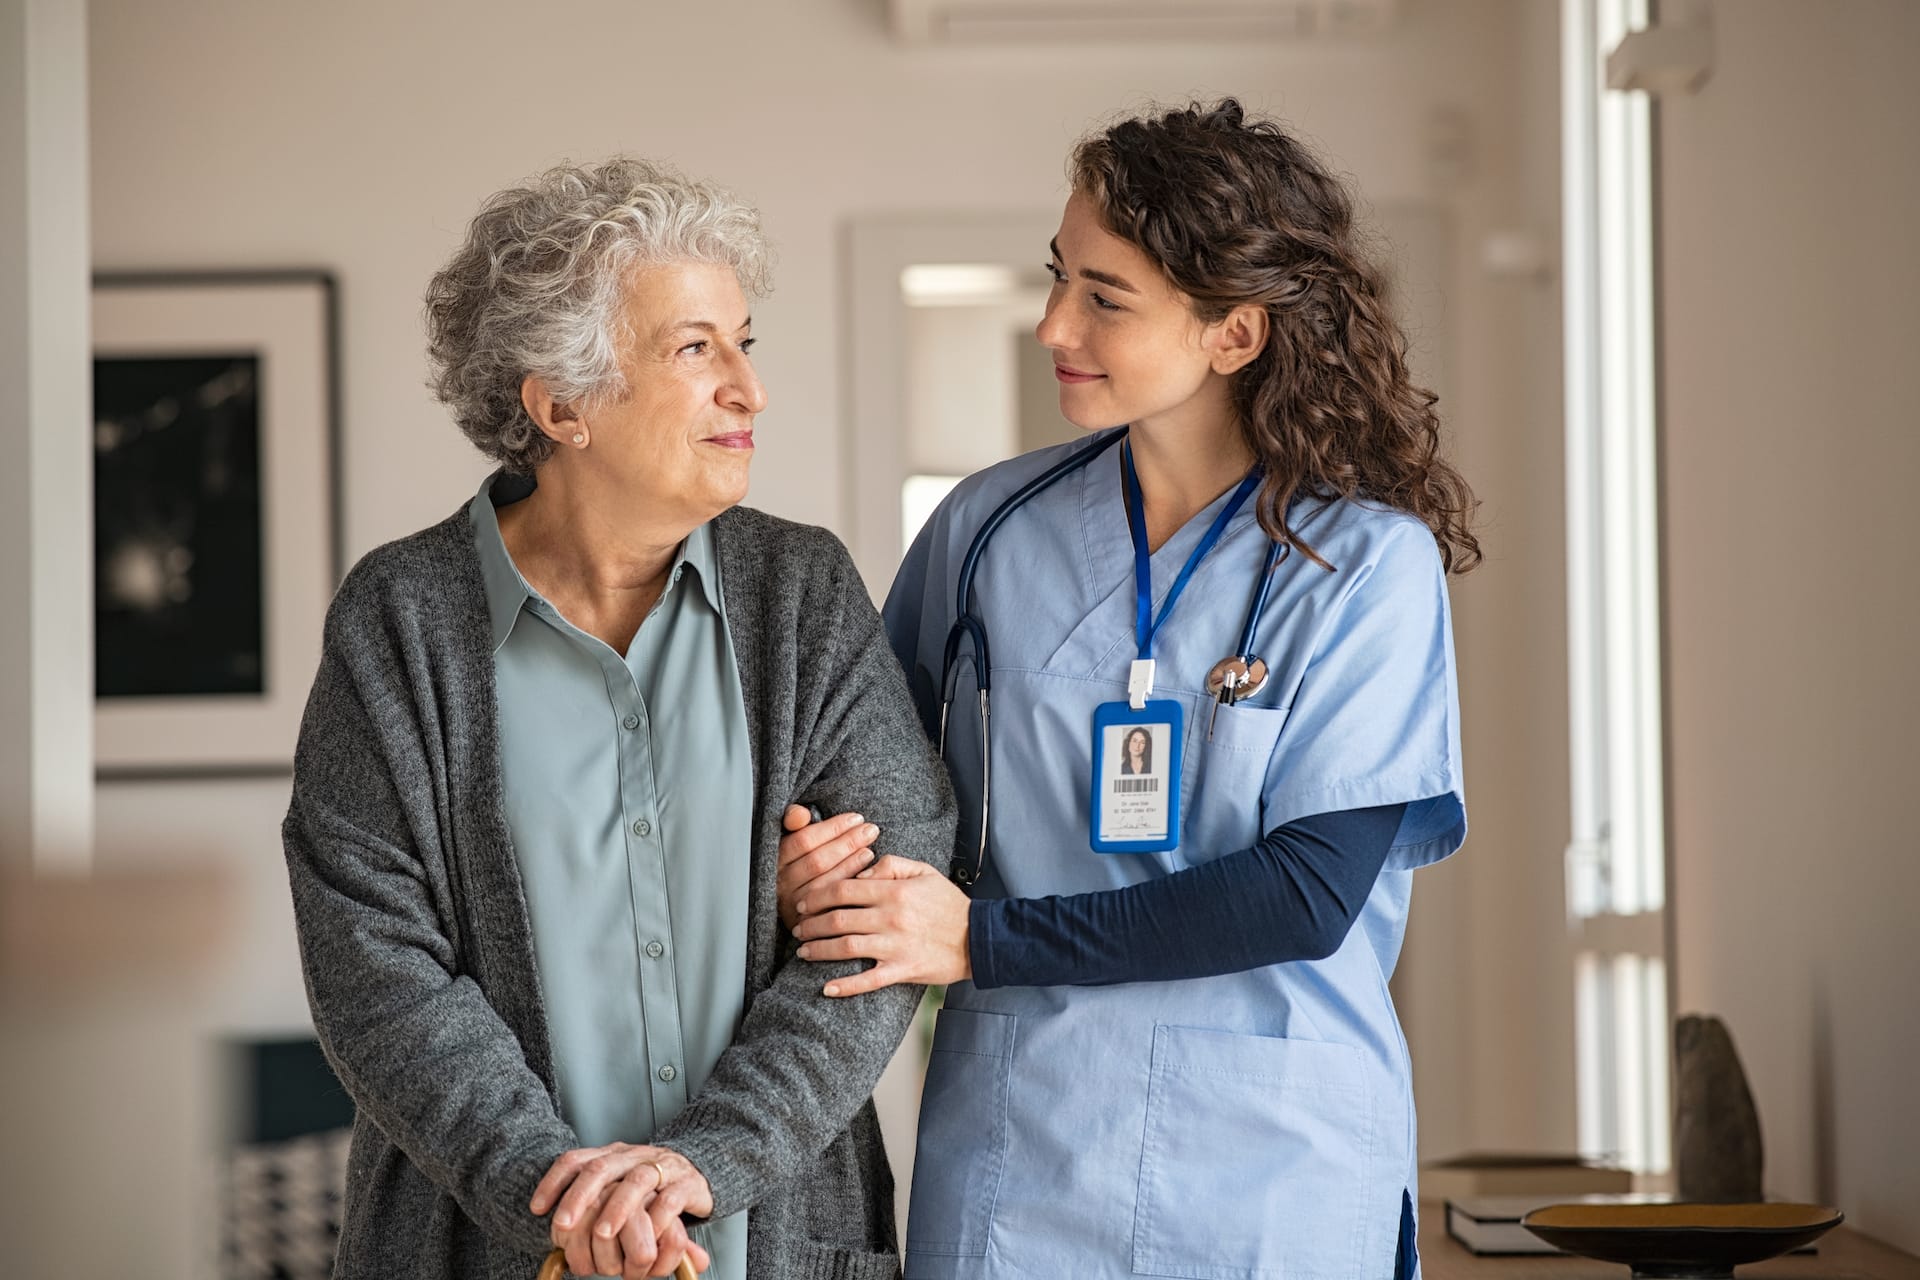 A nurse helping an elderly woman